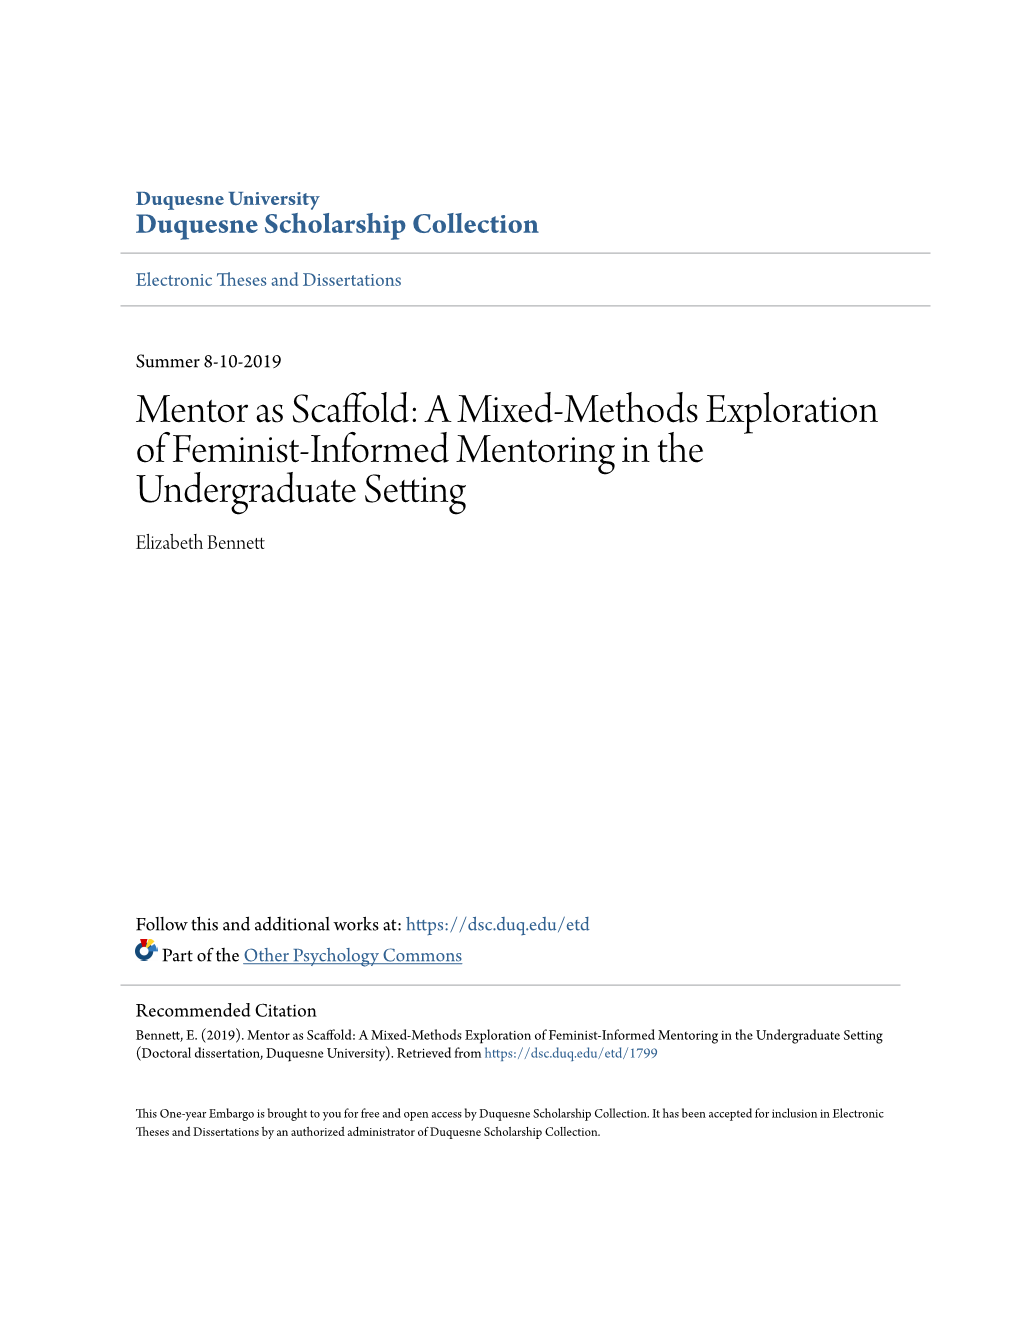 Mentor As Scaffold: a Mixed-Methods Exploration of Feminist-Informed Mentoring in the Undergraduate Setting Elizabeth Bennett